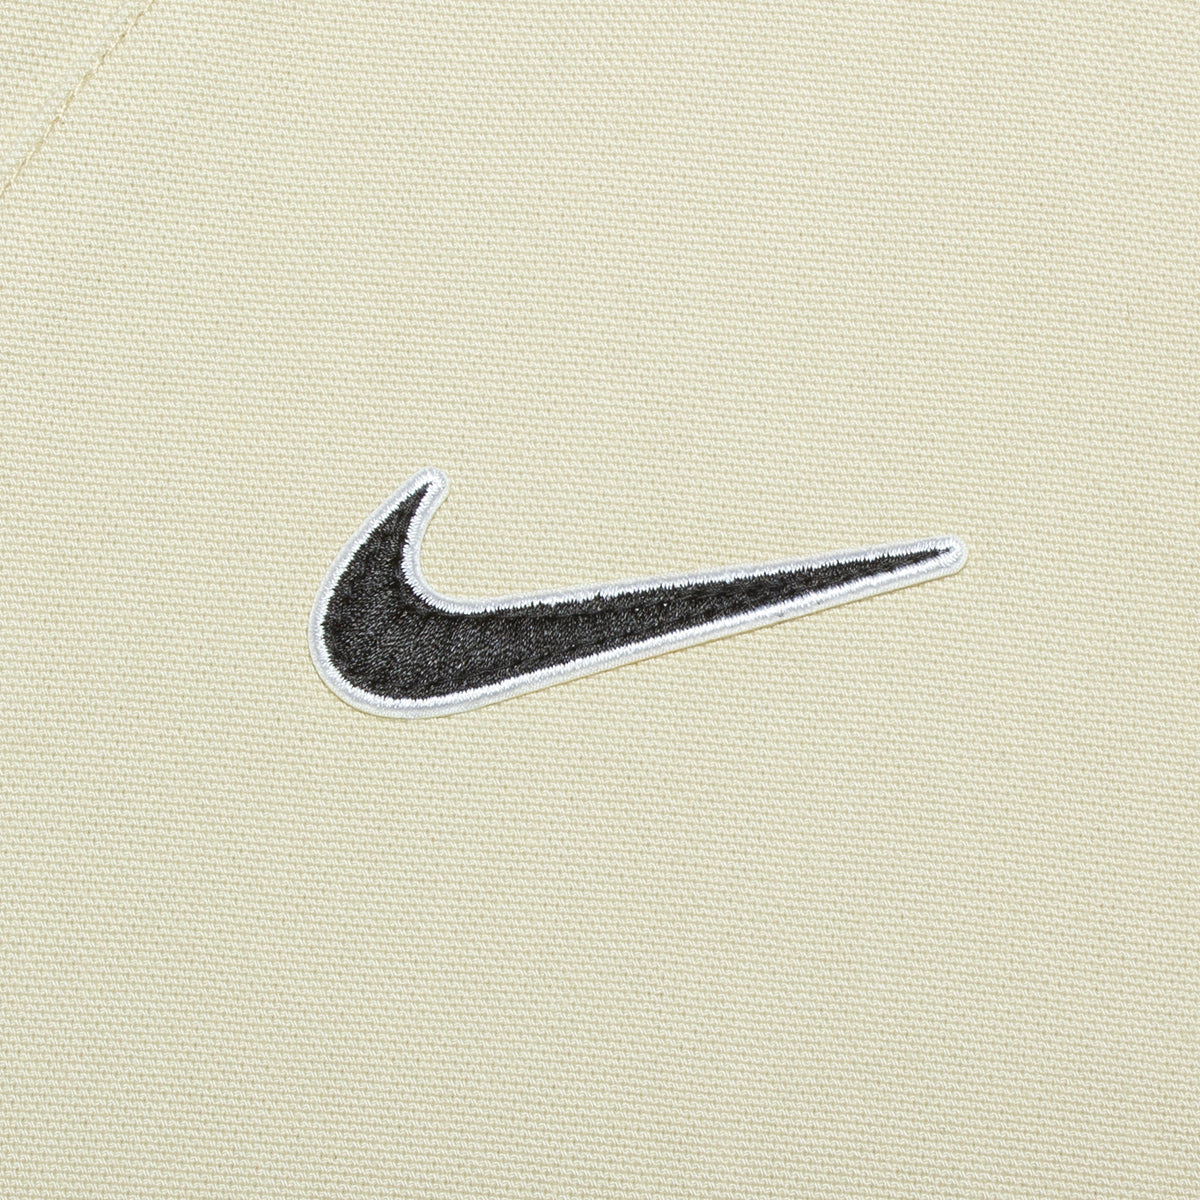 Nike SB Baseball Jersey  Rattan / White